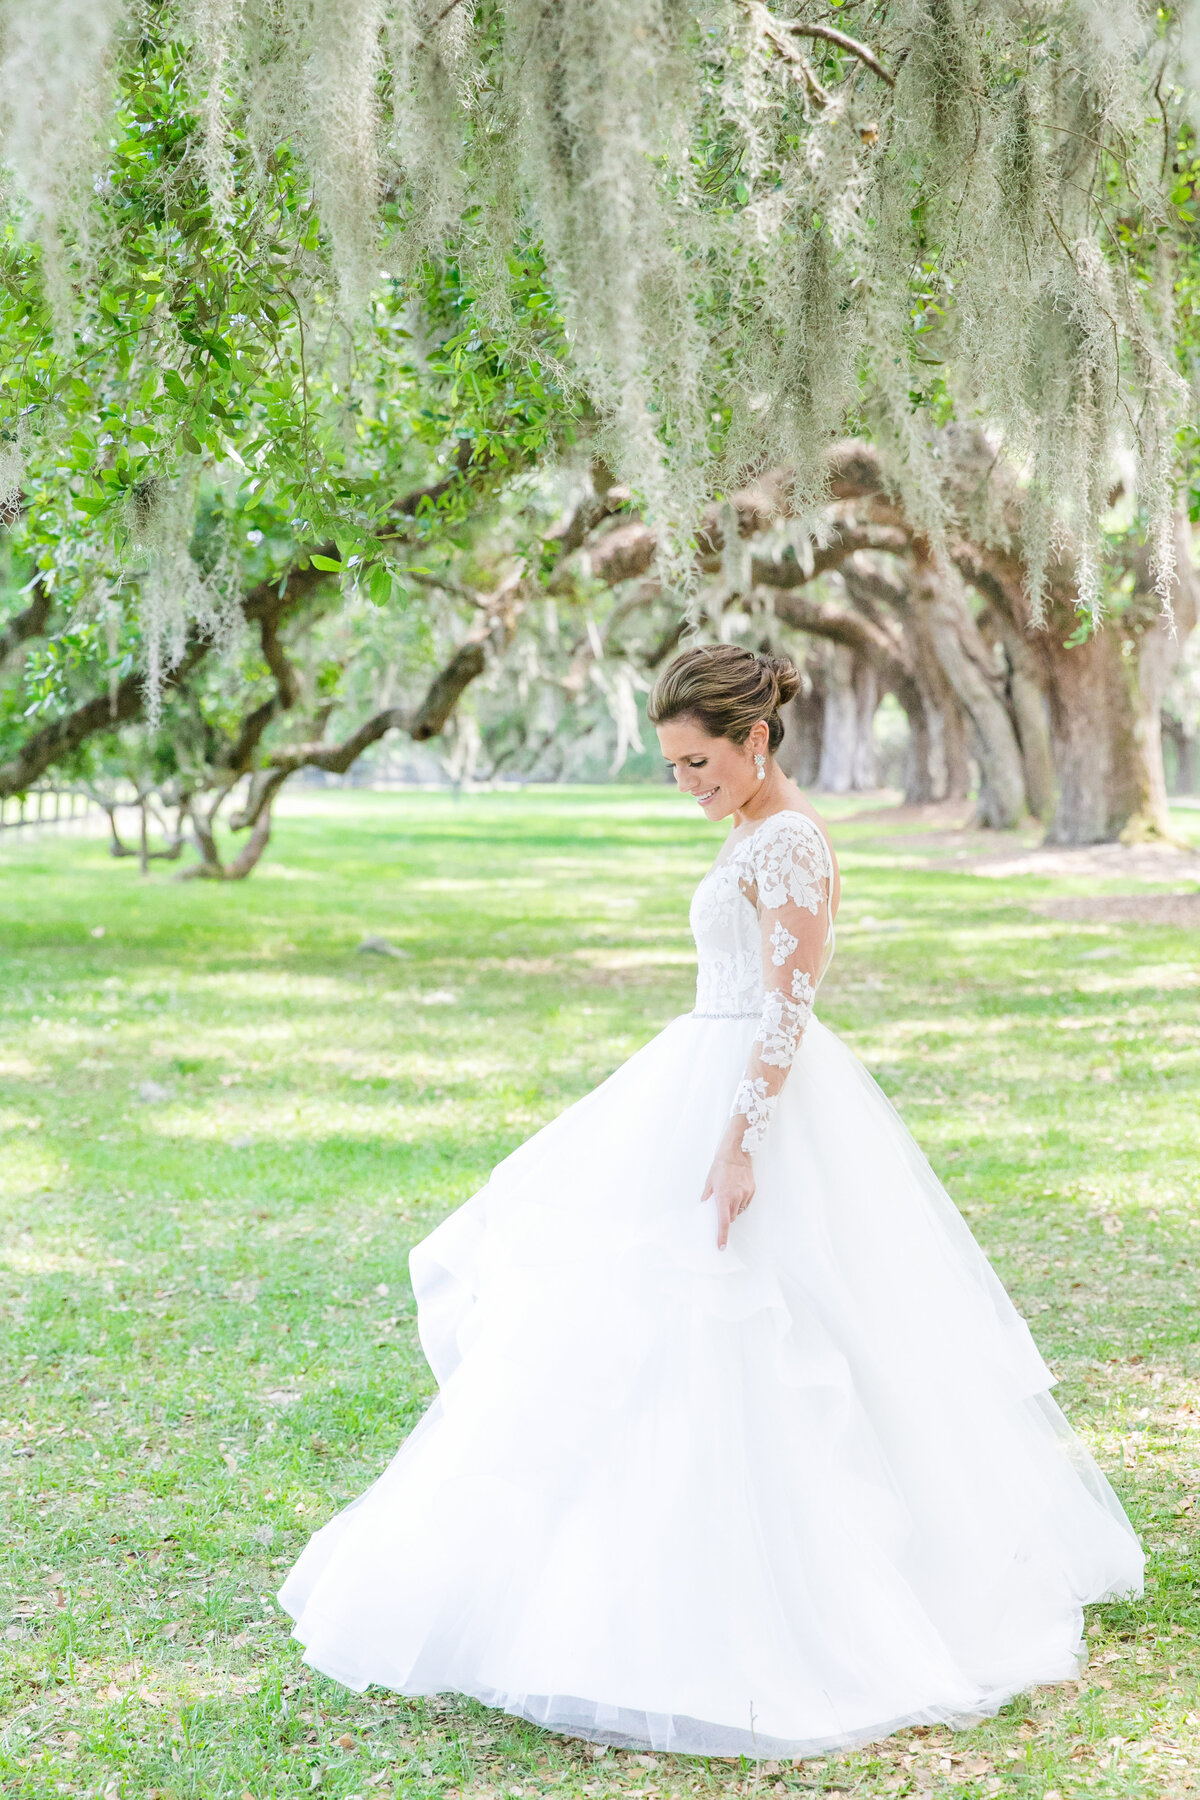 Bridal portraits at her Boone Hall Plantation elegant spring soiree wedding  |  Charleston wedding photographer Dana Cubbage Weddings